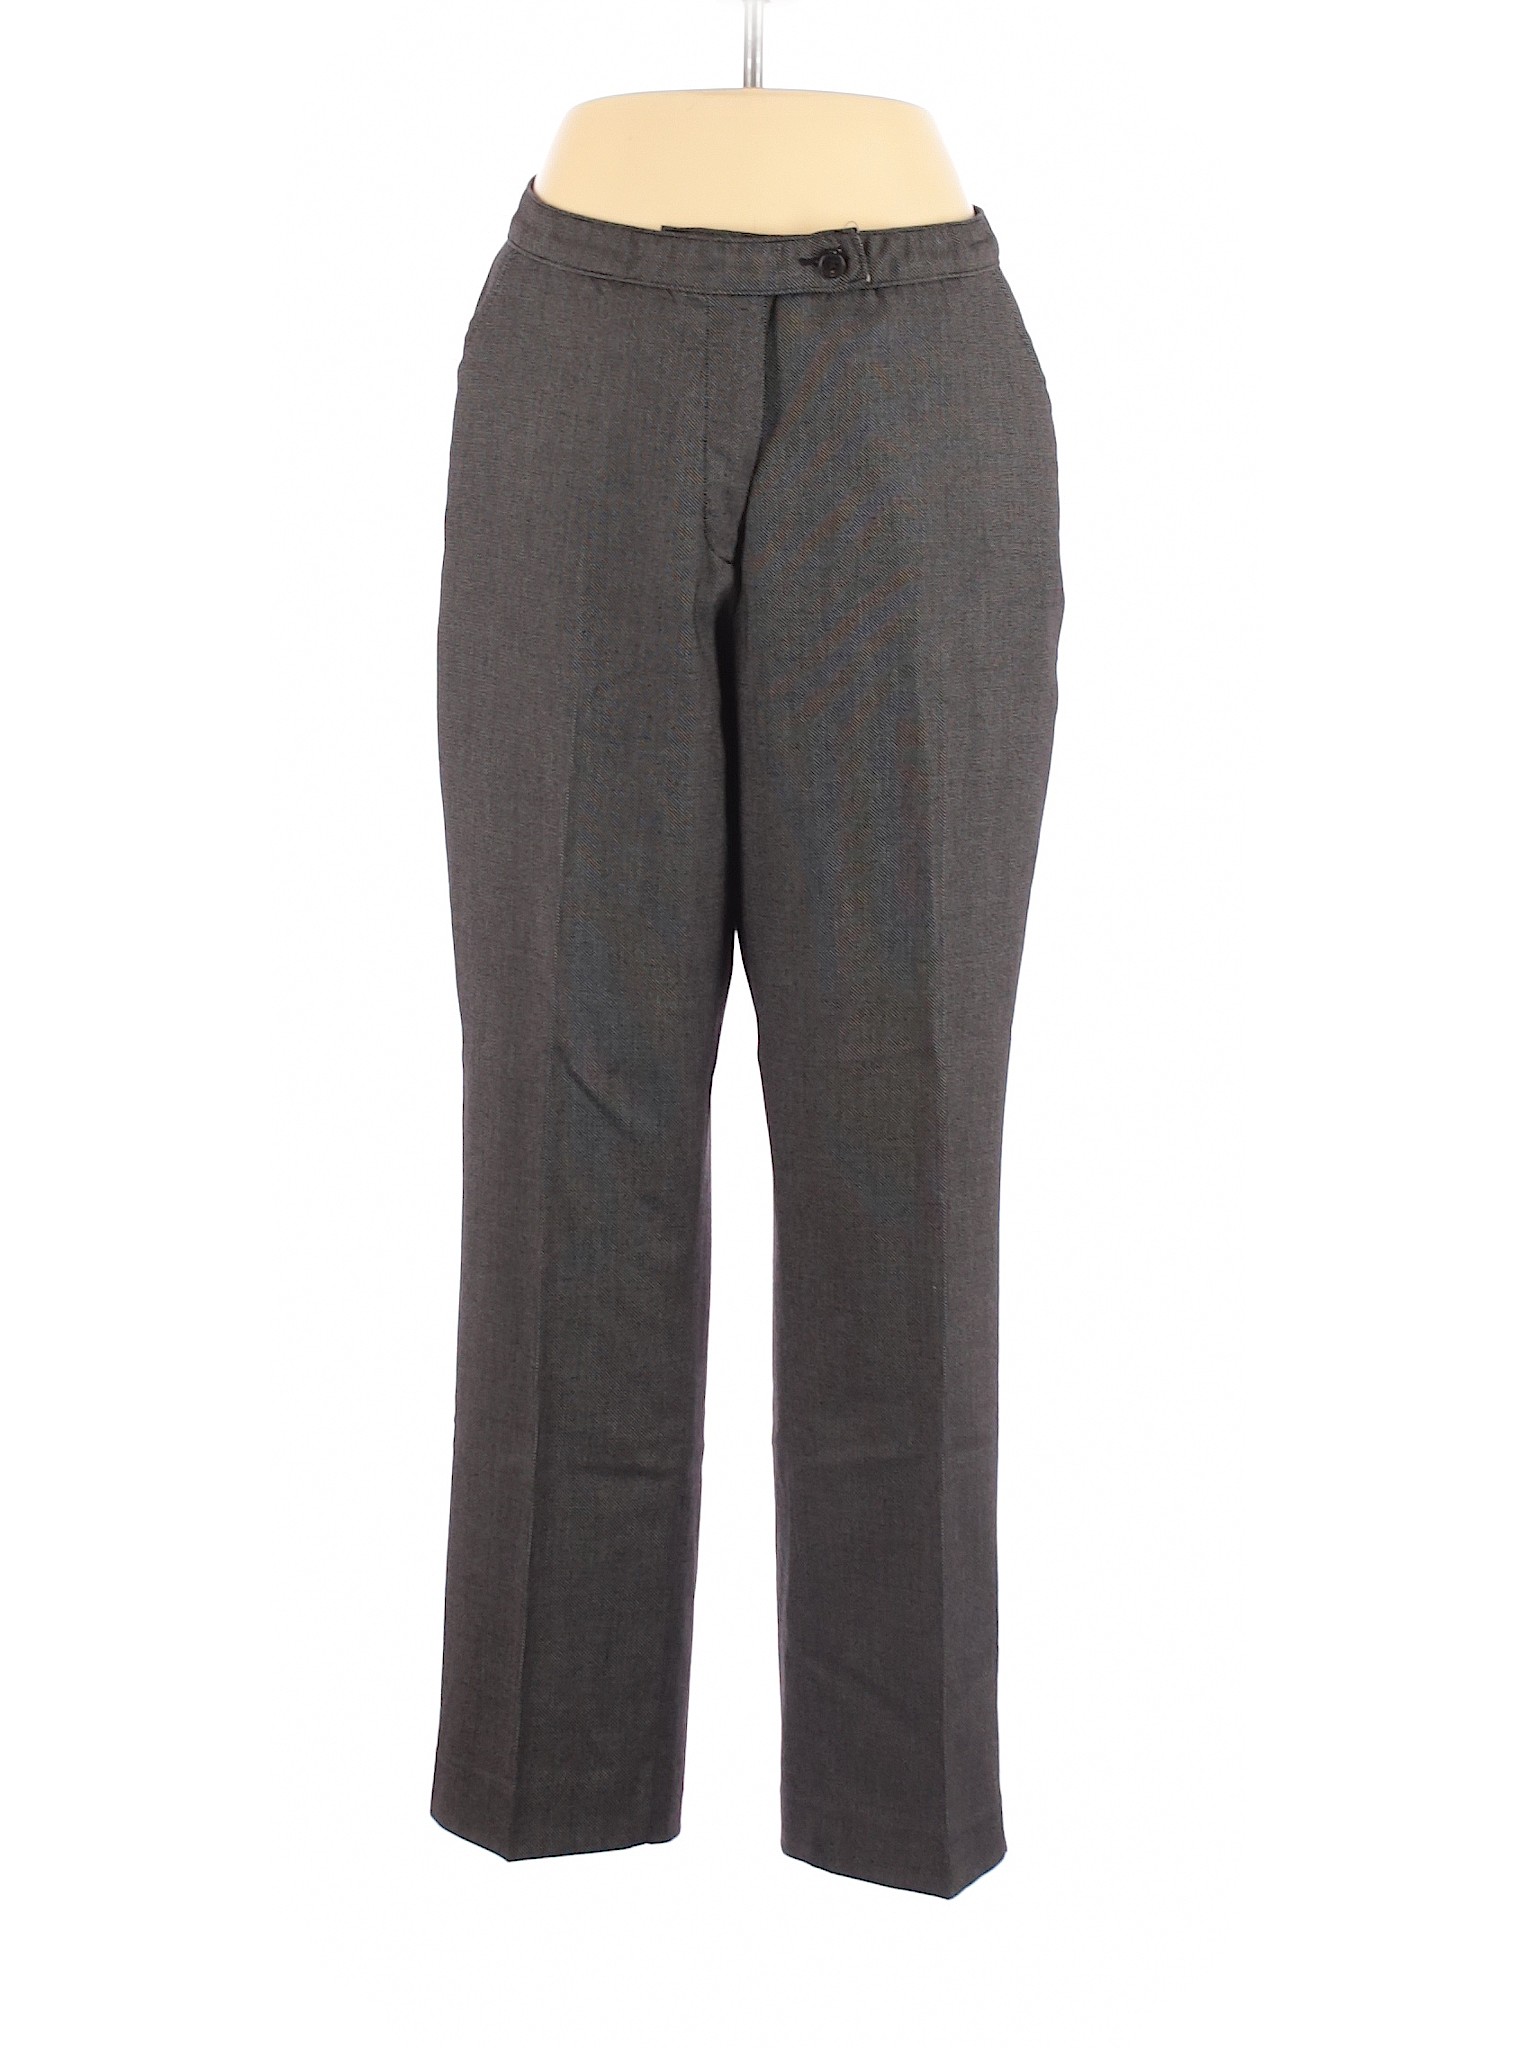 Investments II Women Gray Dress Pants 14 | eBay